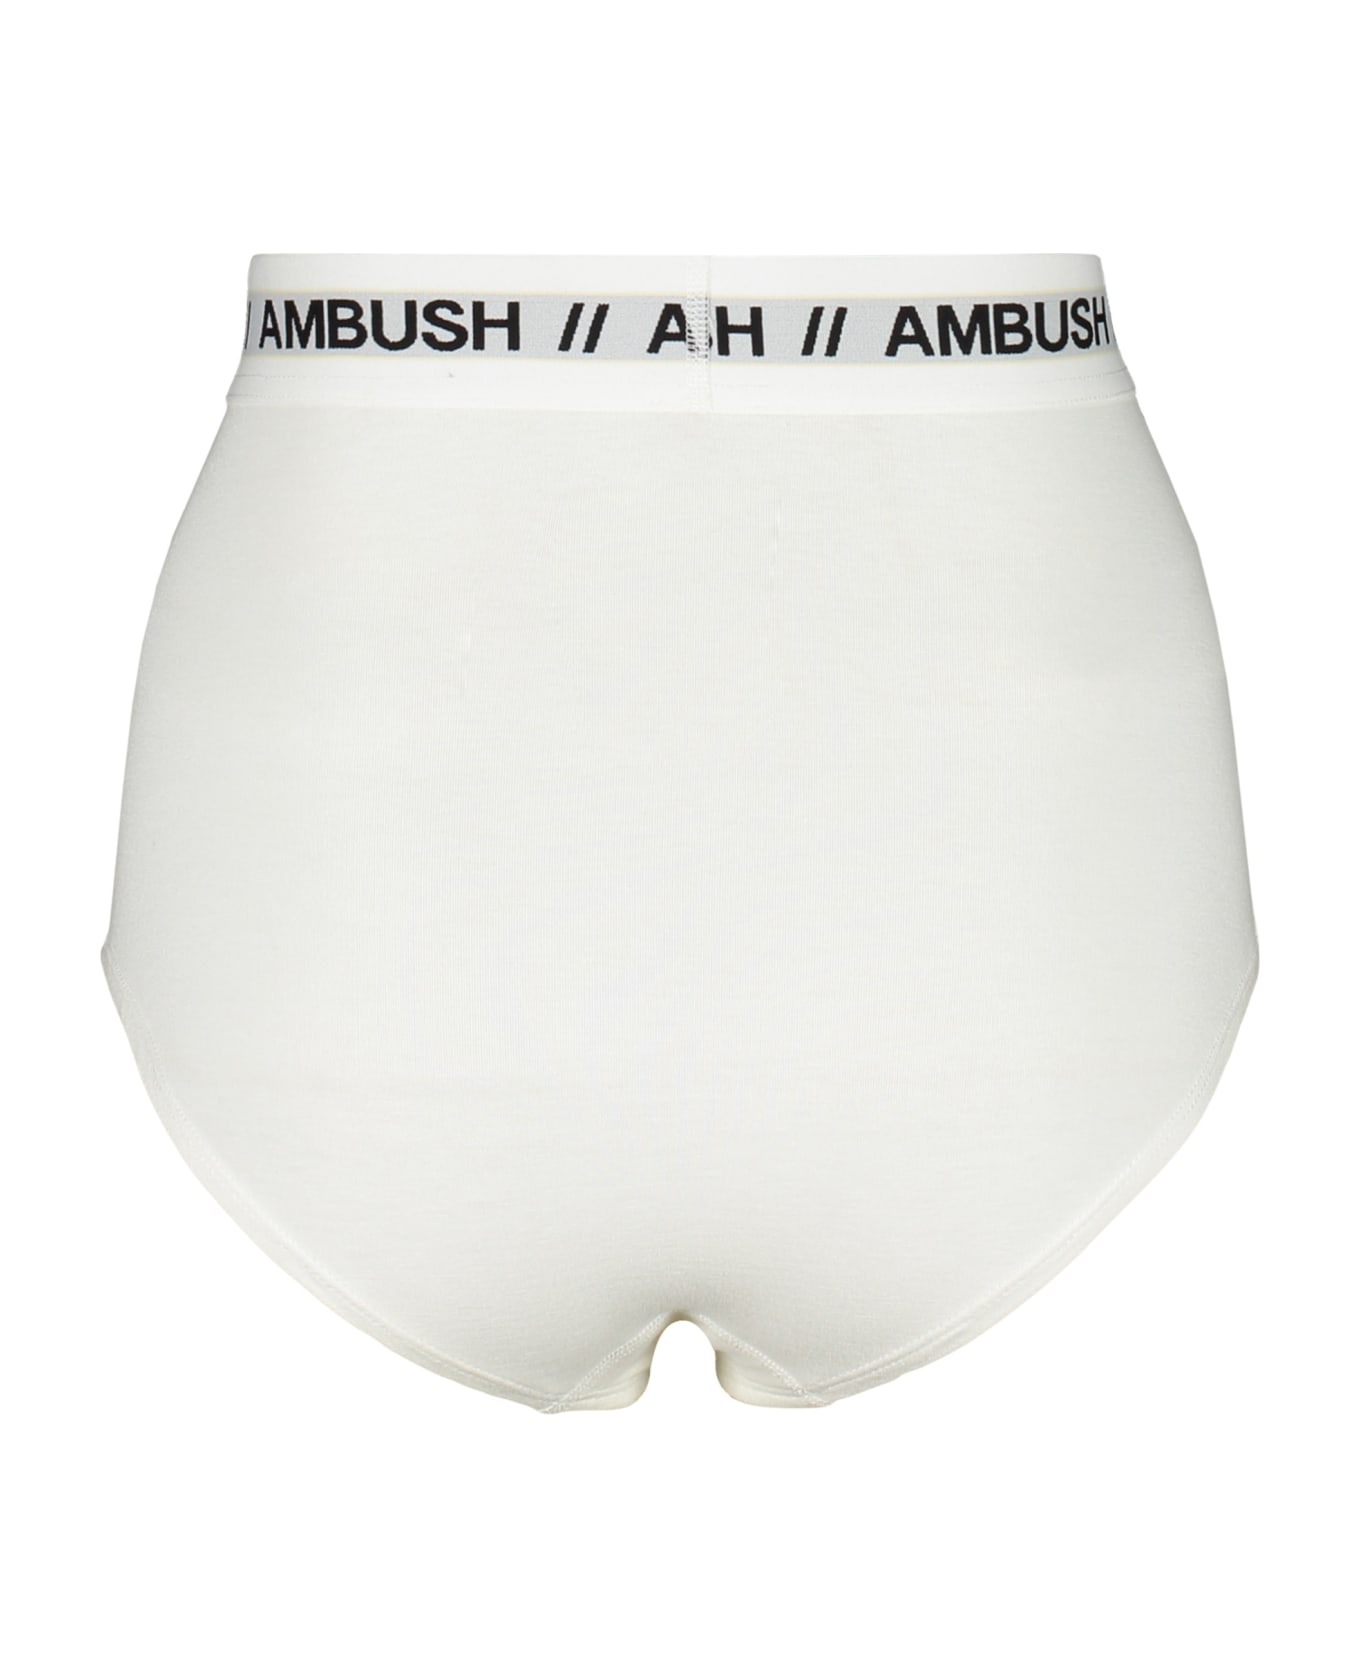 AMBUSH Plain Color Briefs - White